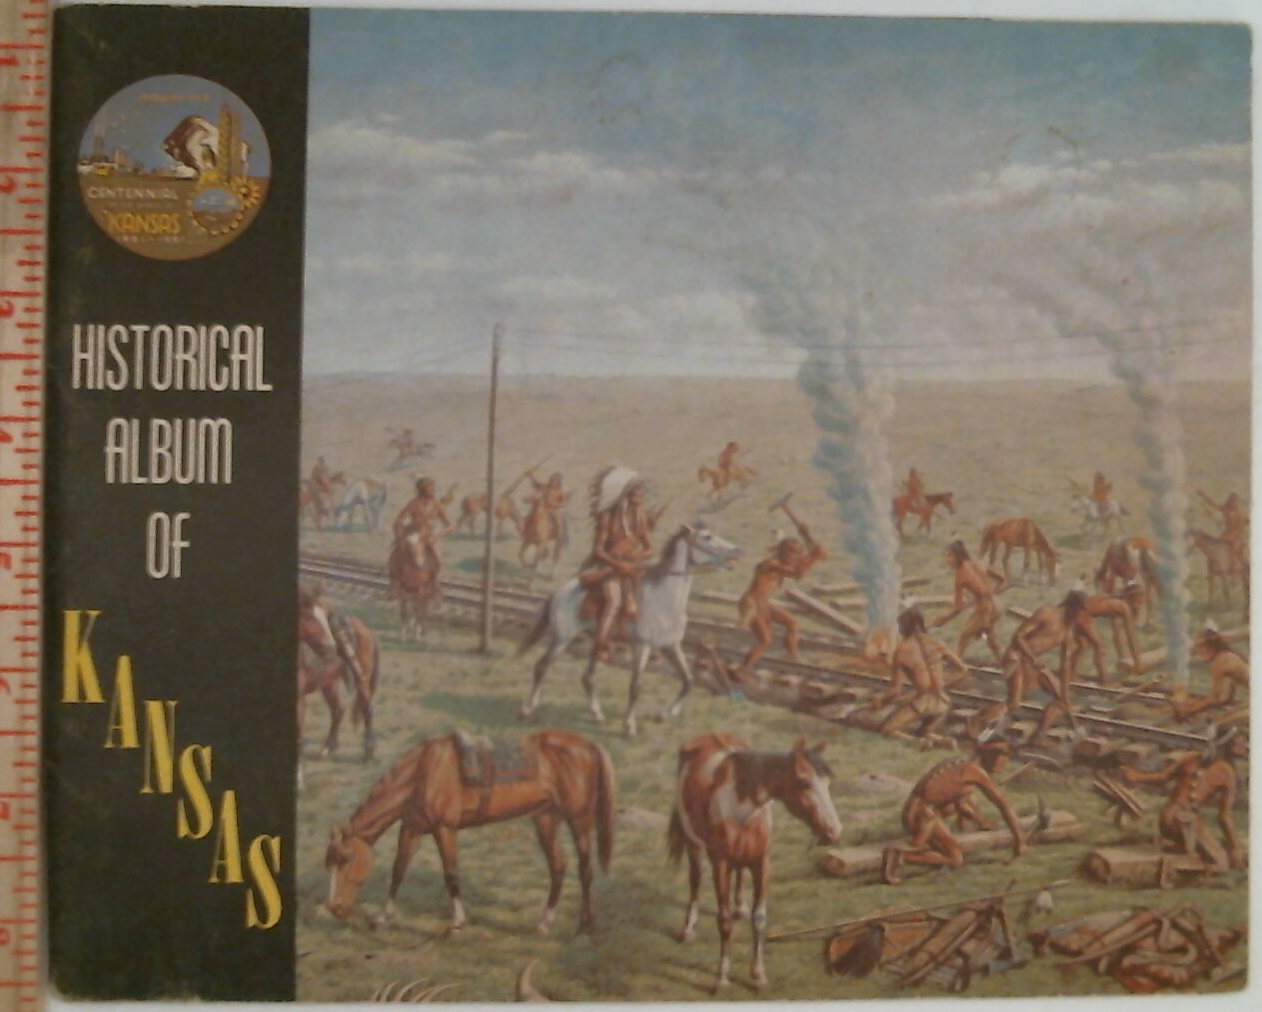 Historical Album of Kansas